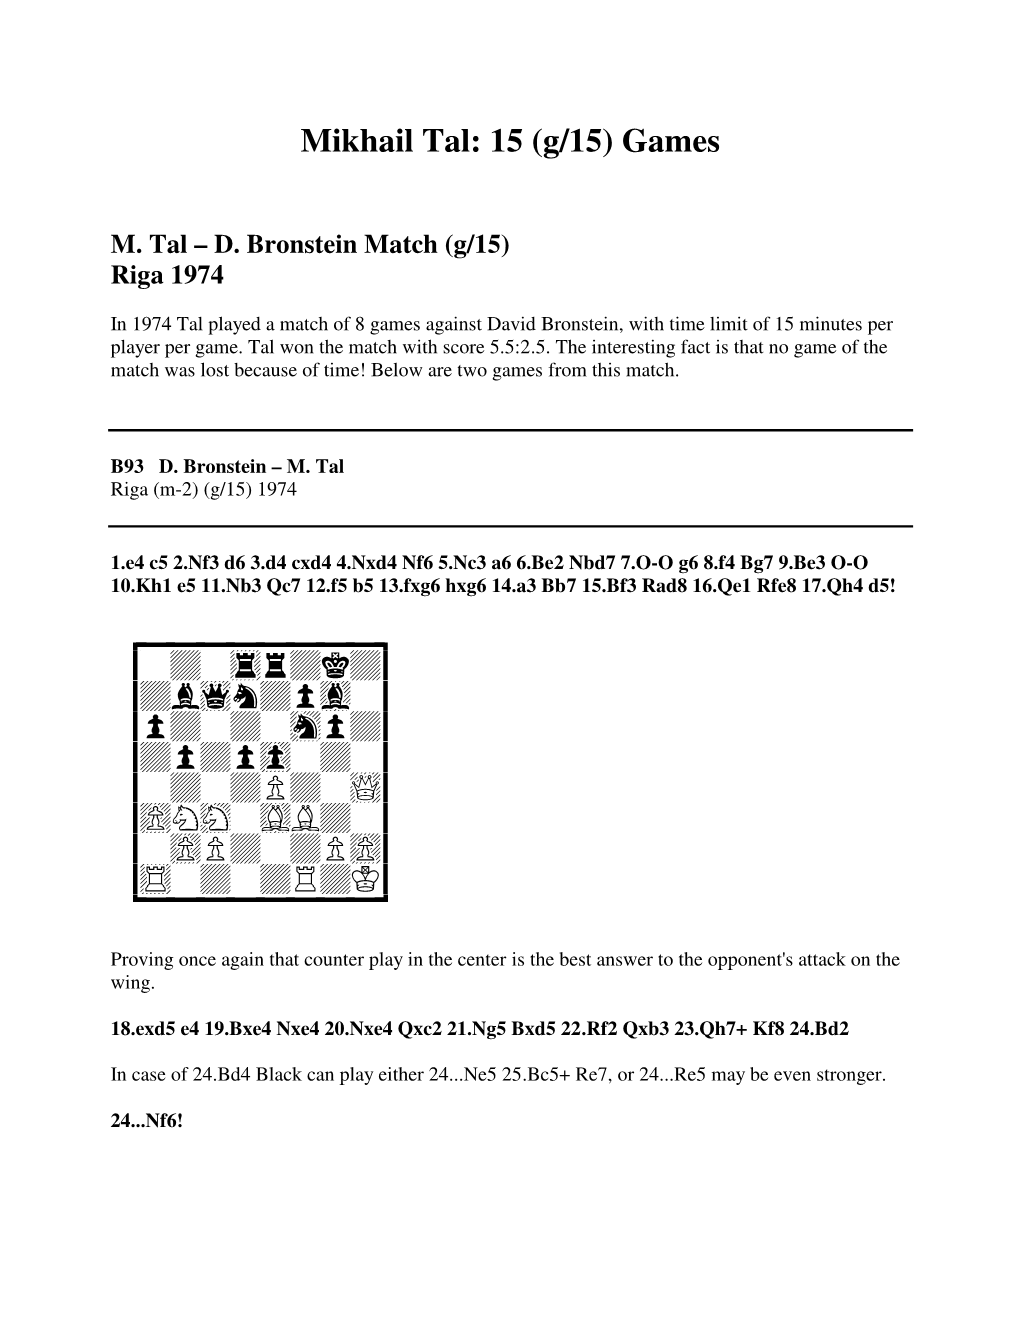 Mikhail Tal: 15 (G/15) Games